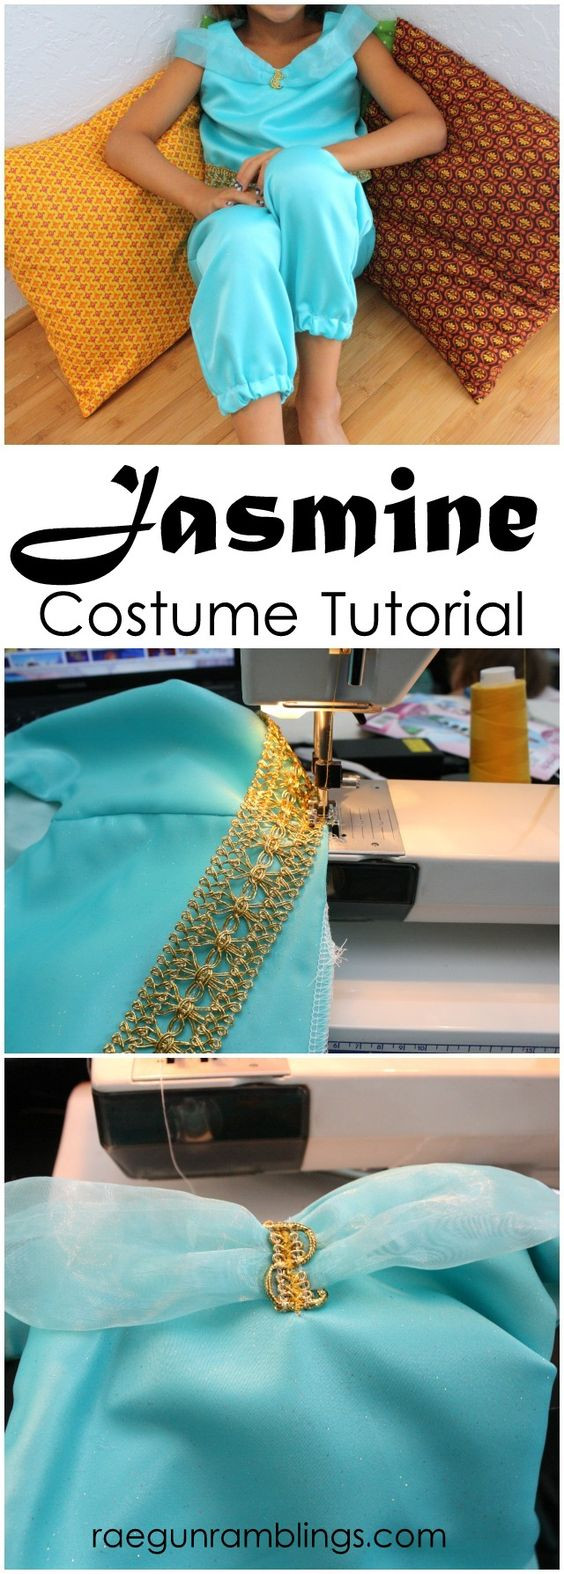 Jasmine DIY Costume
 10 Princess Jasmine Costumes 2017